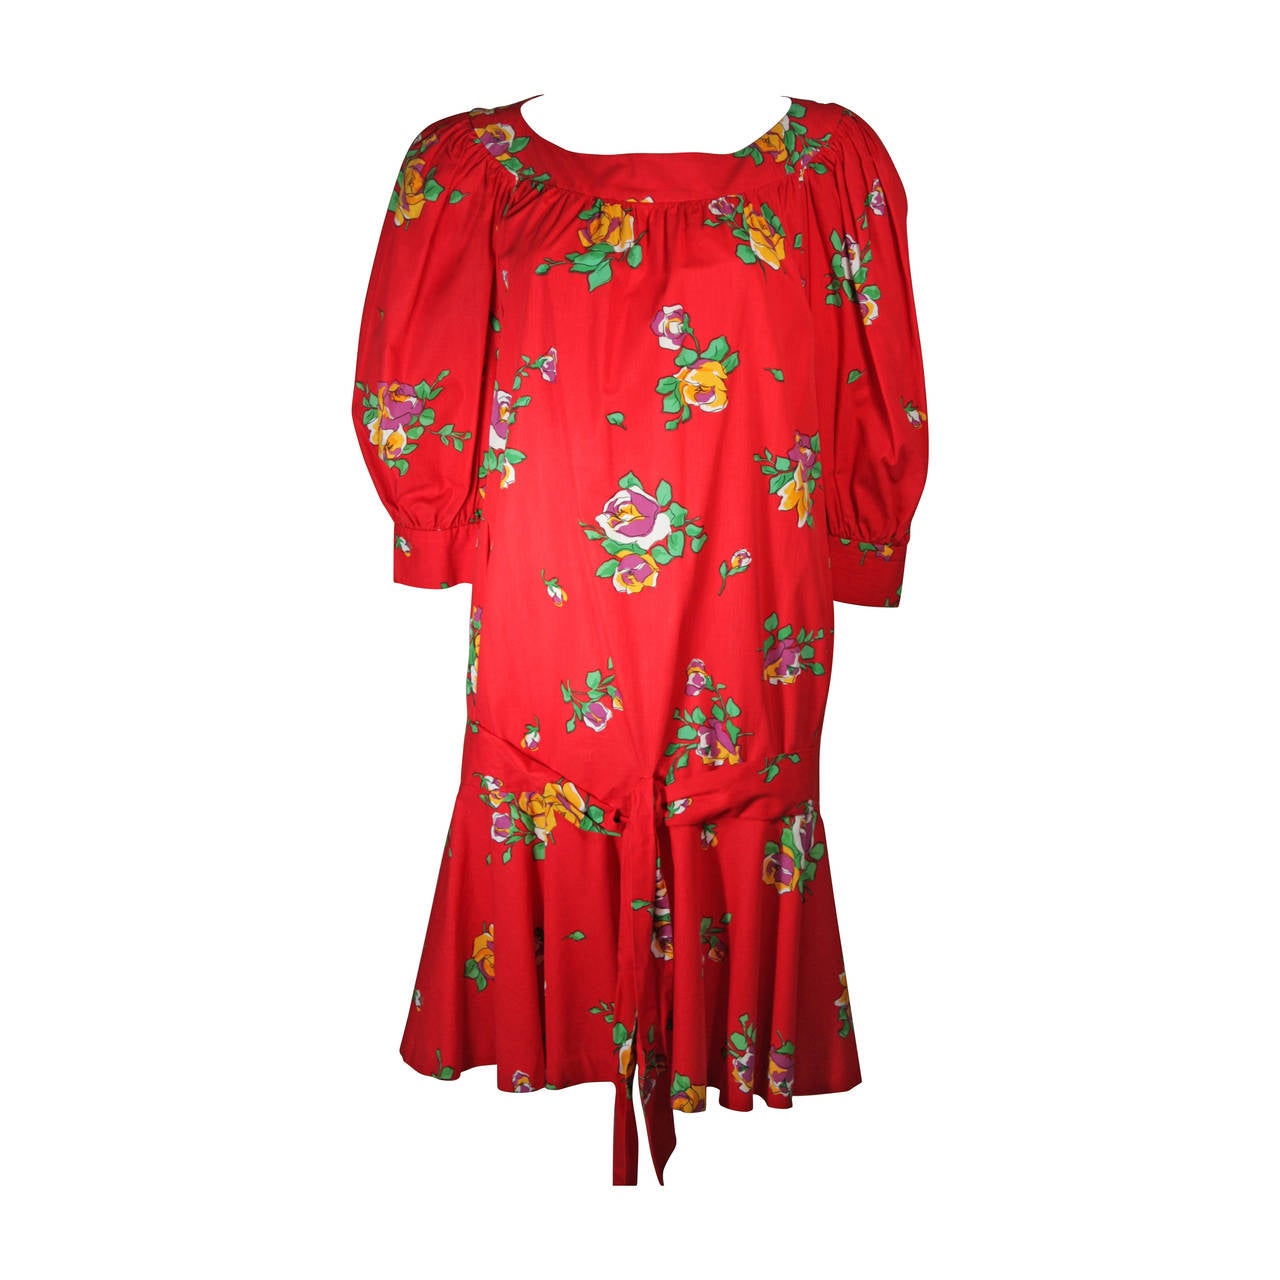 Yves Saint Laurent Red Cotton Drop Waist Dress with Floral Motif Size 36 For Sale